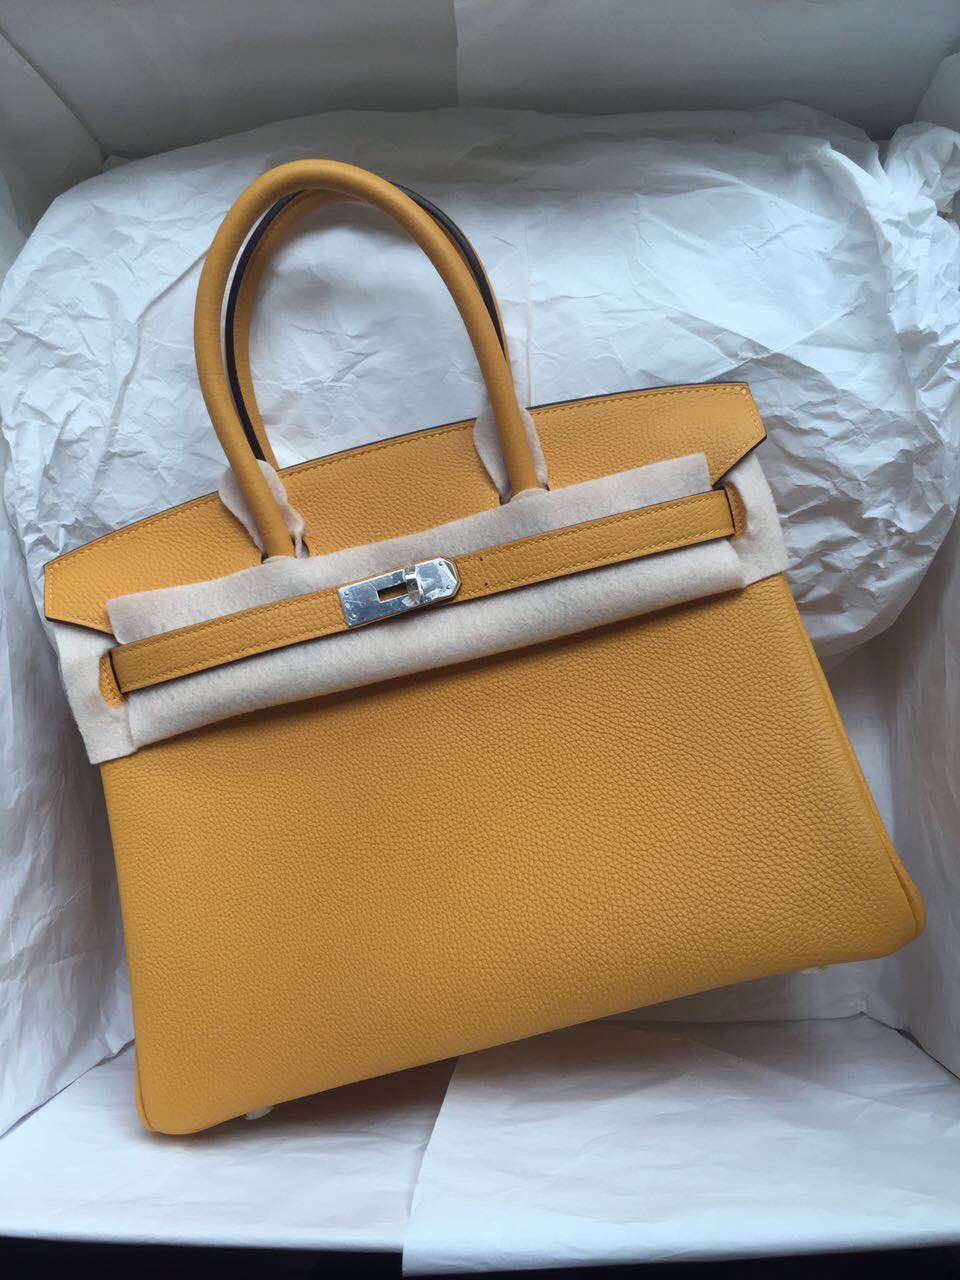 Discount Hermes Birkin Bag Mustard Yellow Togo Leather Tote Handbag ...